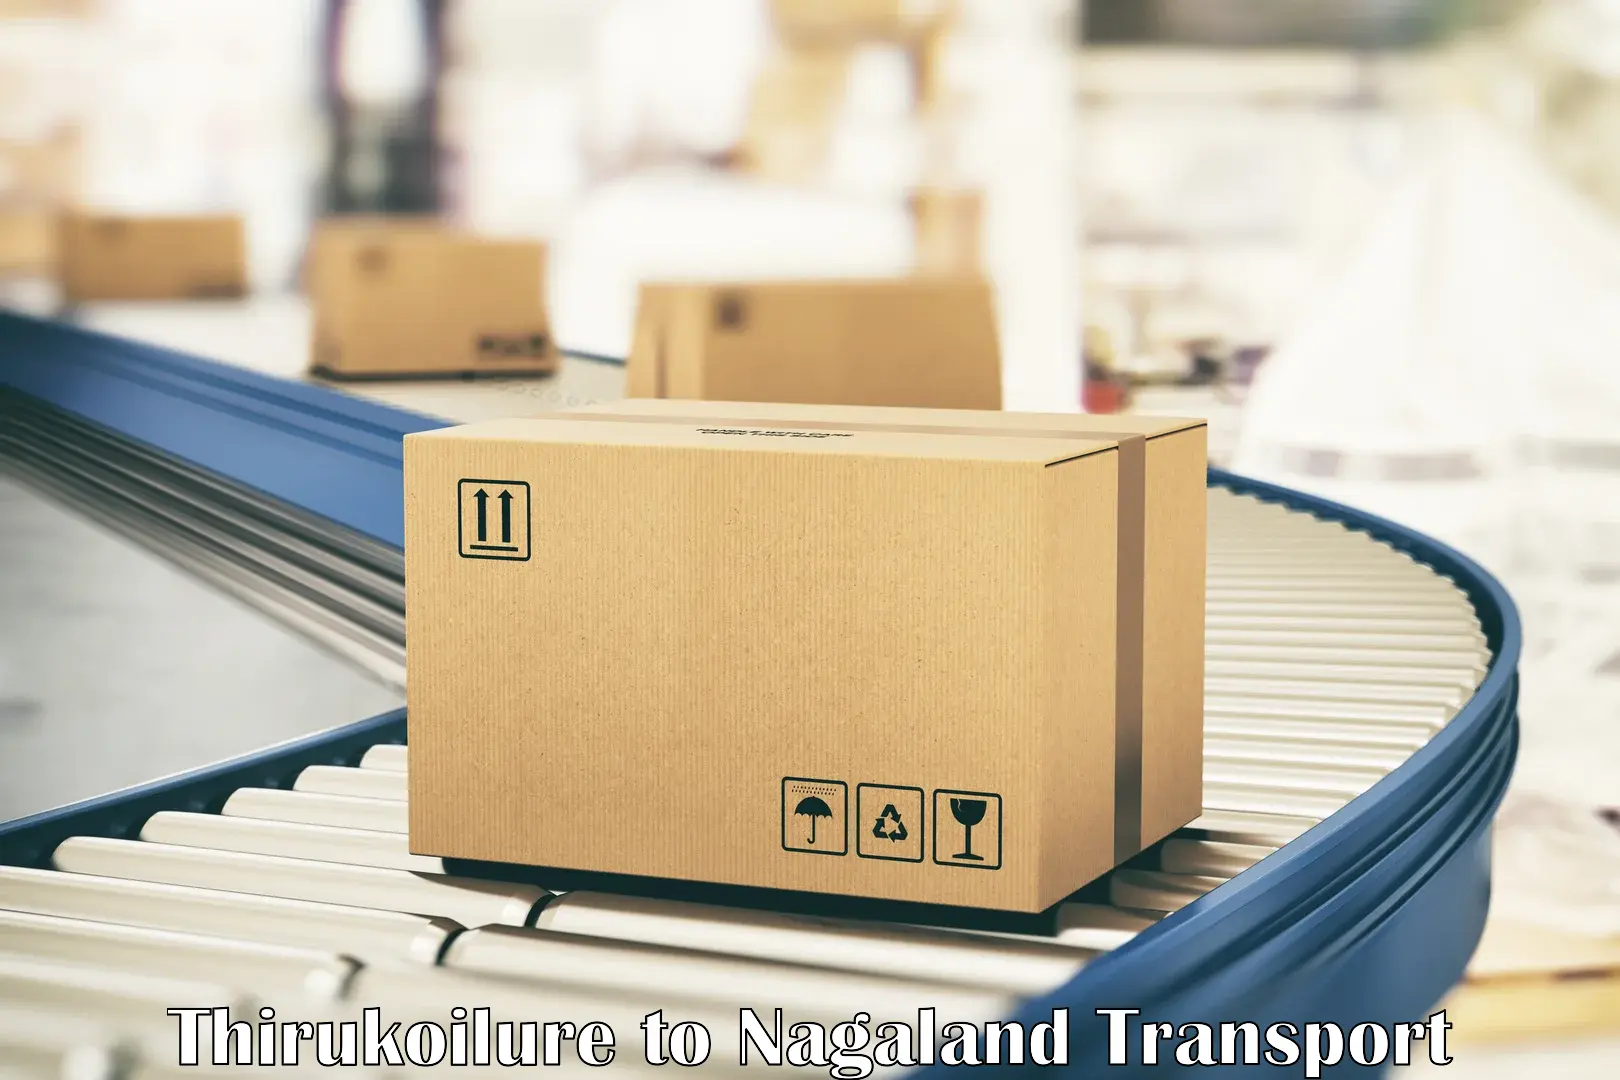 Online transport service Thirukoilure to NIT Nagaland